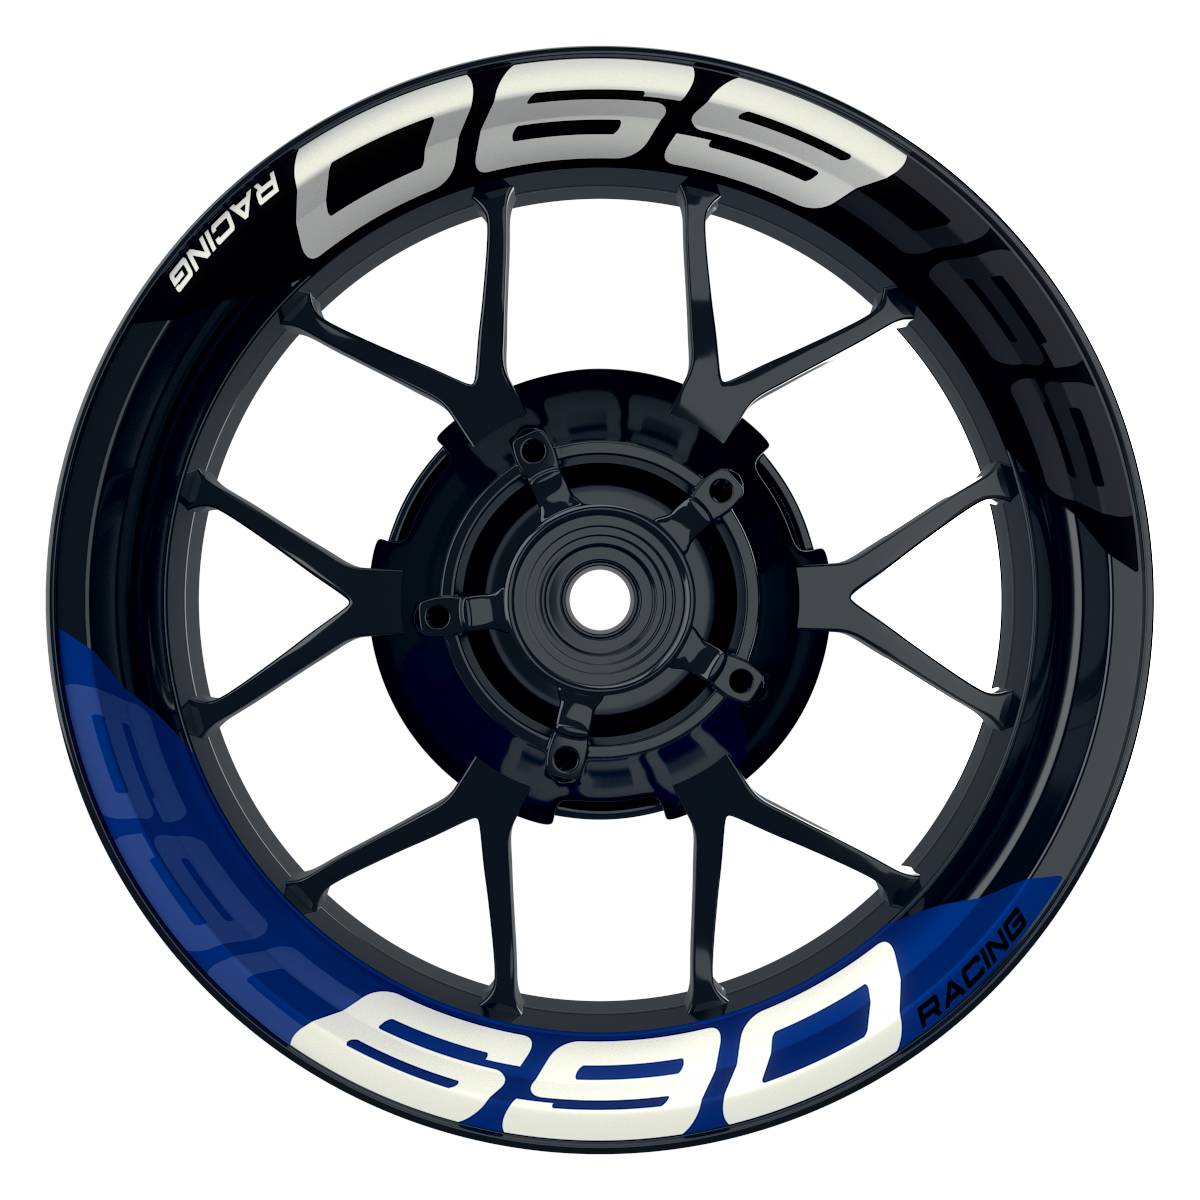 Wheelsticker Felgenaufkleber KTM Racing 690 halb halb V2 schwarz blau Frontansicht